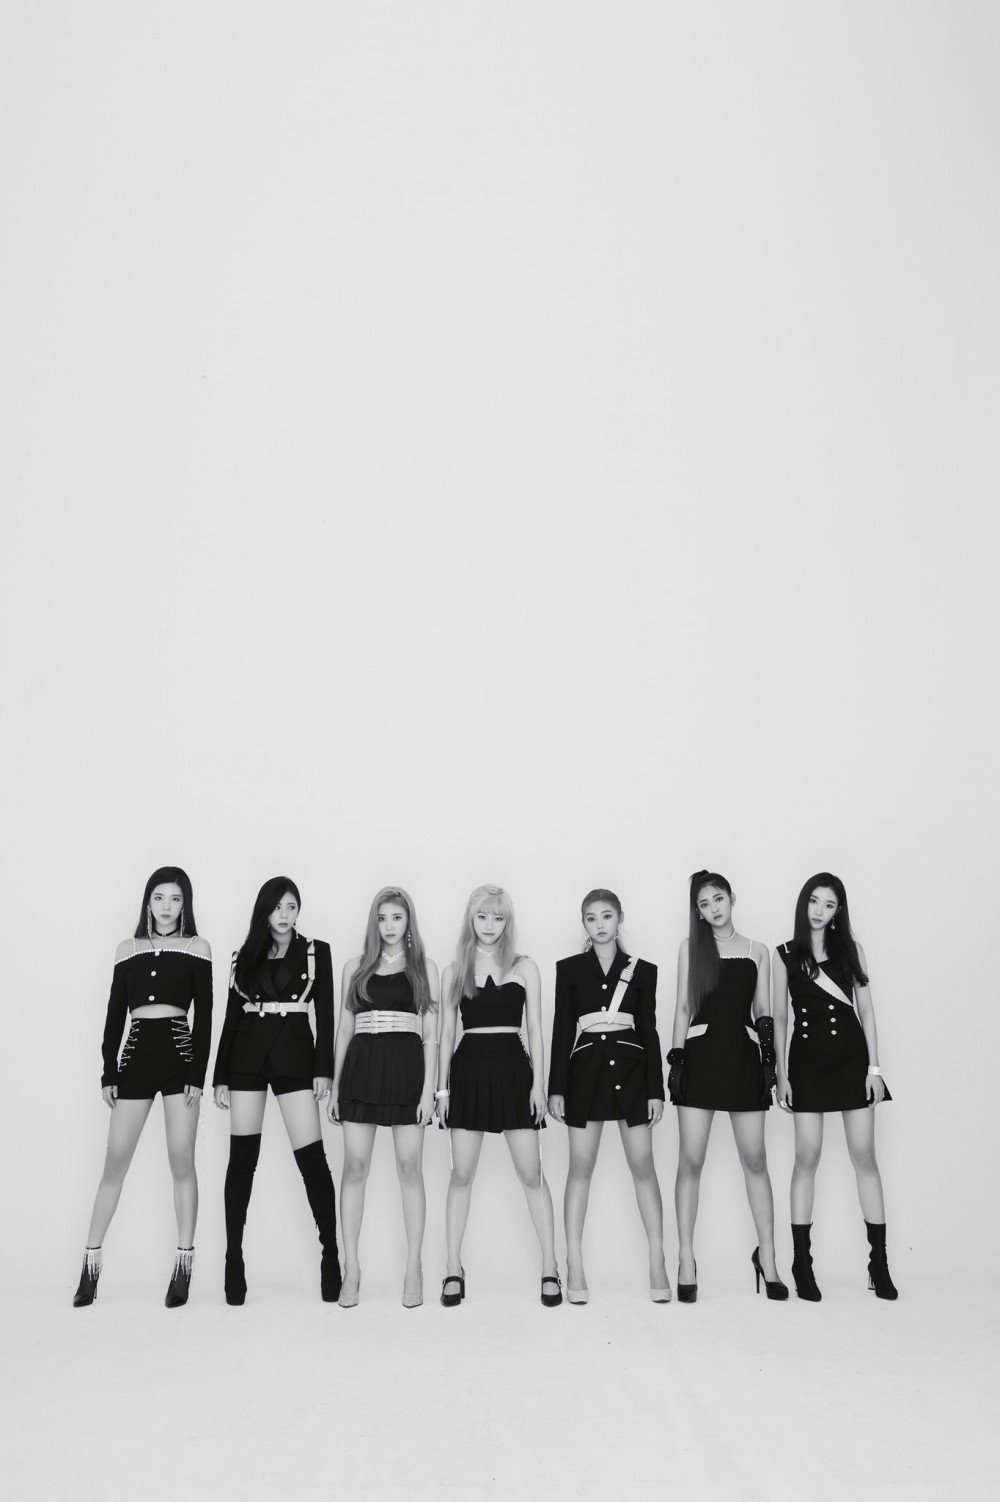 C9 Entertainment's new girl group 'C9 GIRLZ' reveals all 7 members - allkpop